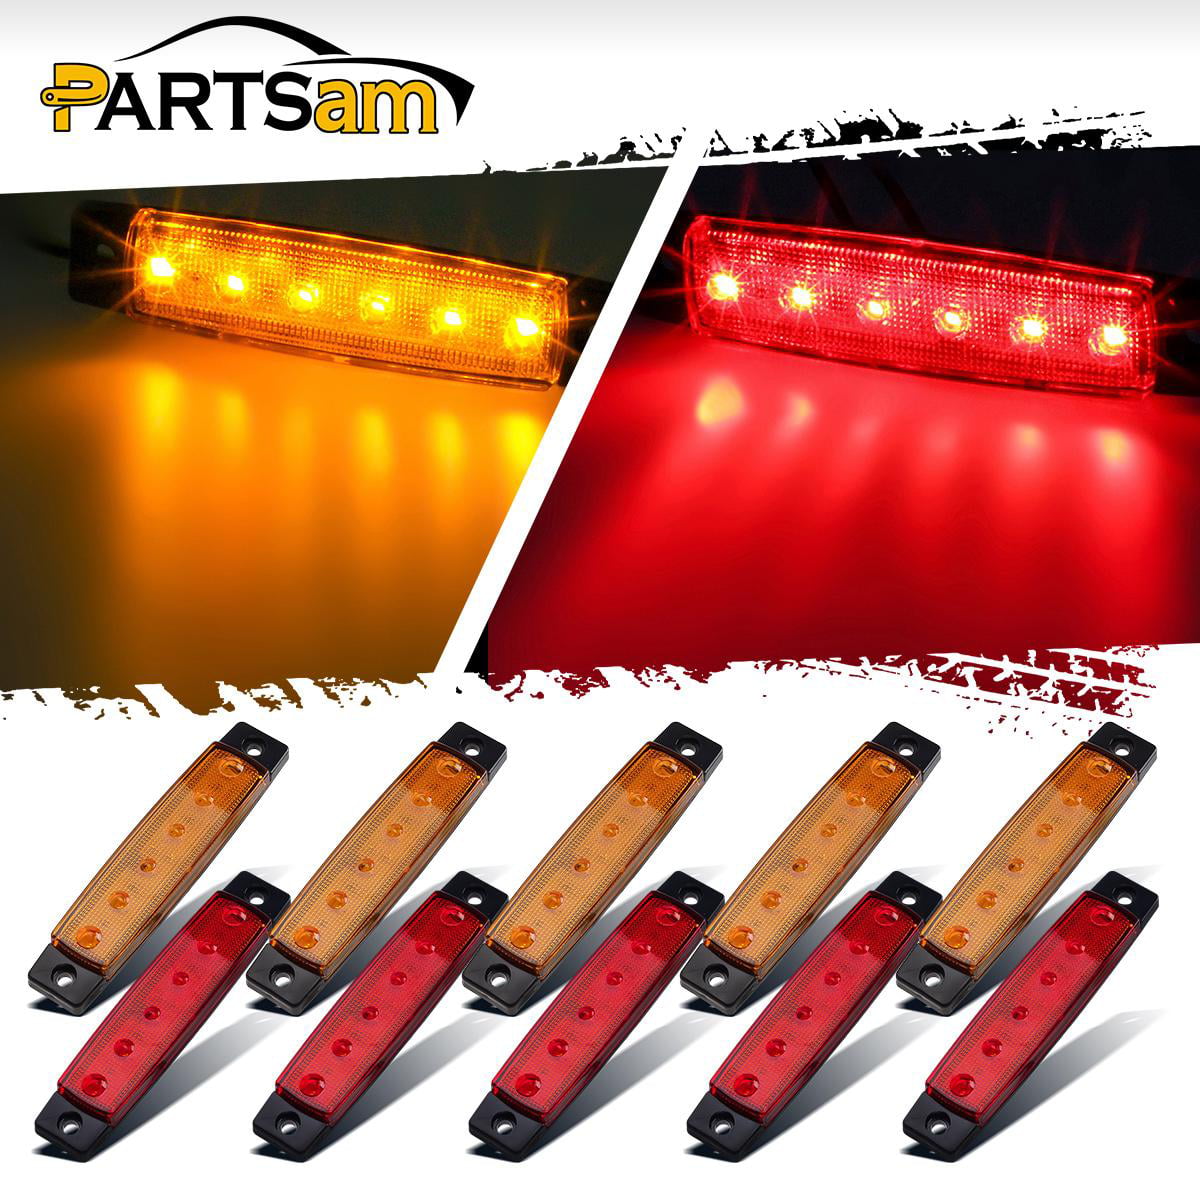 10X 6LED Amber Front Side Marker Light Indicator Lamp Car Truck Trailer Orange